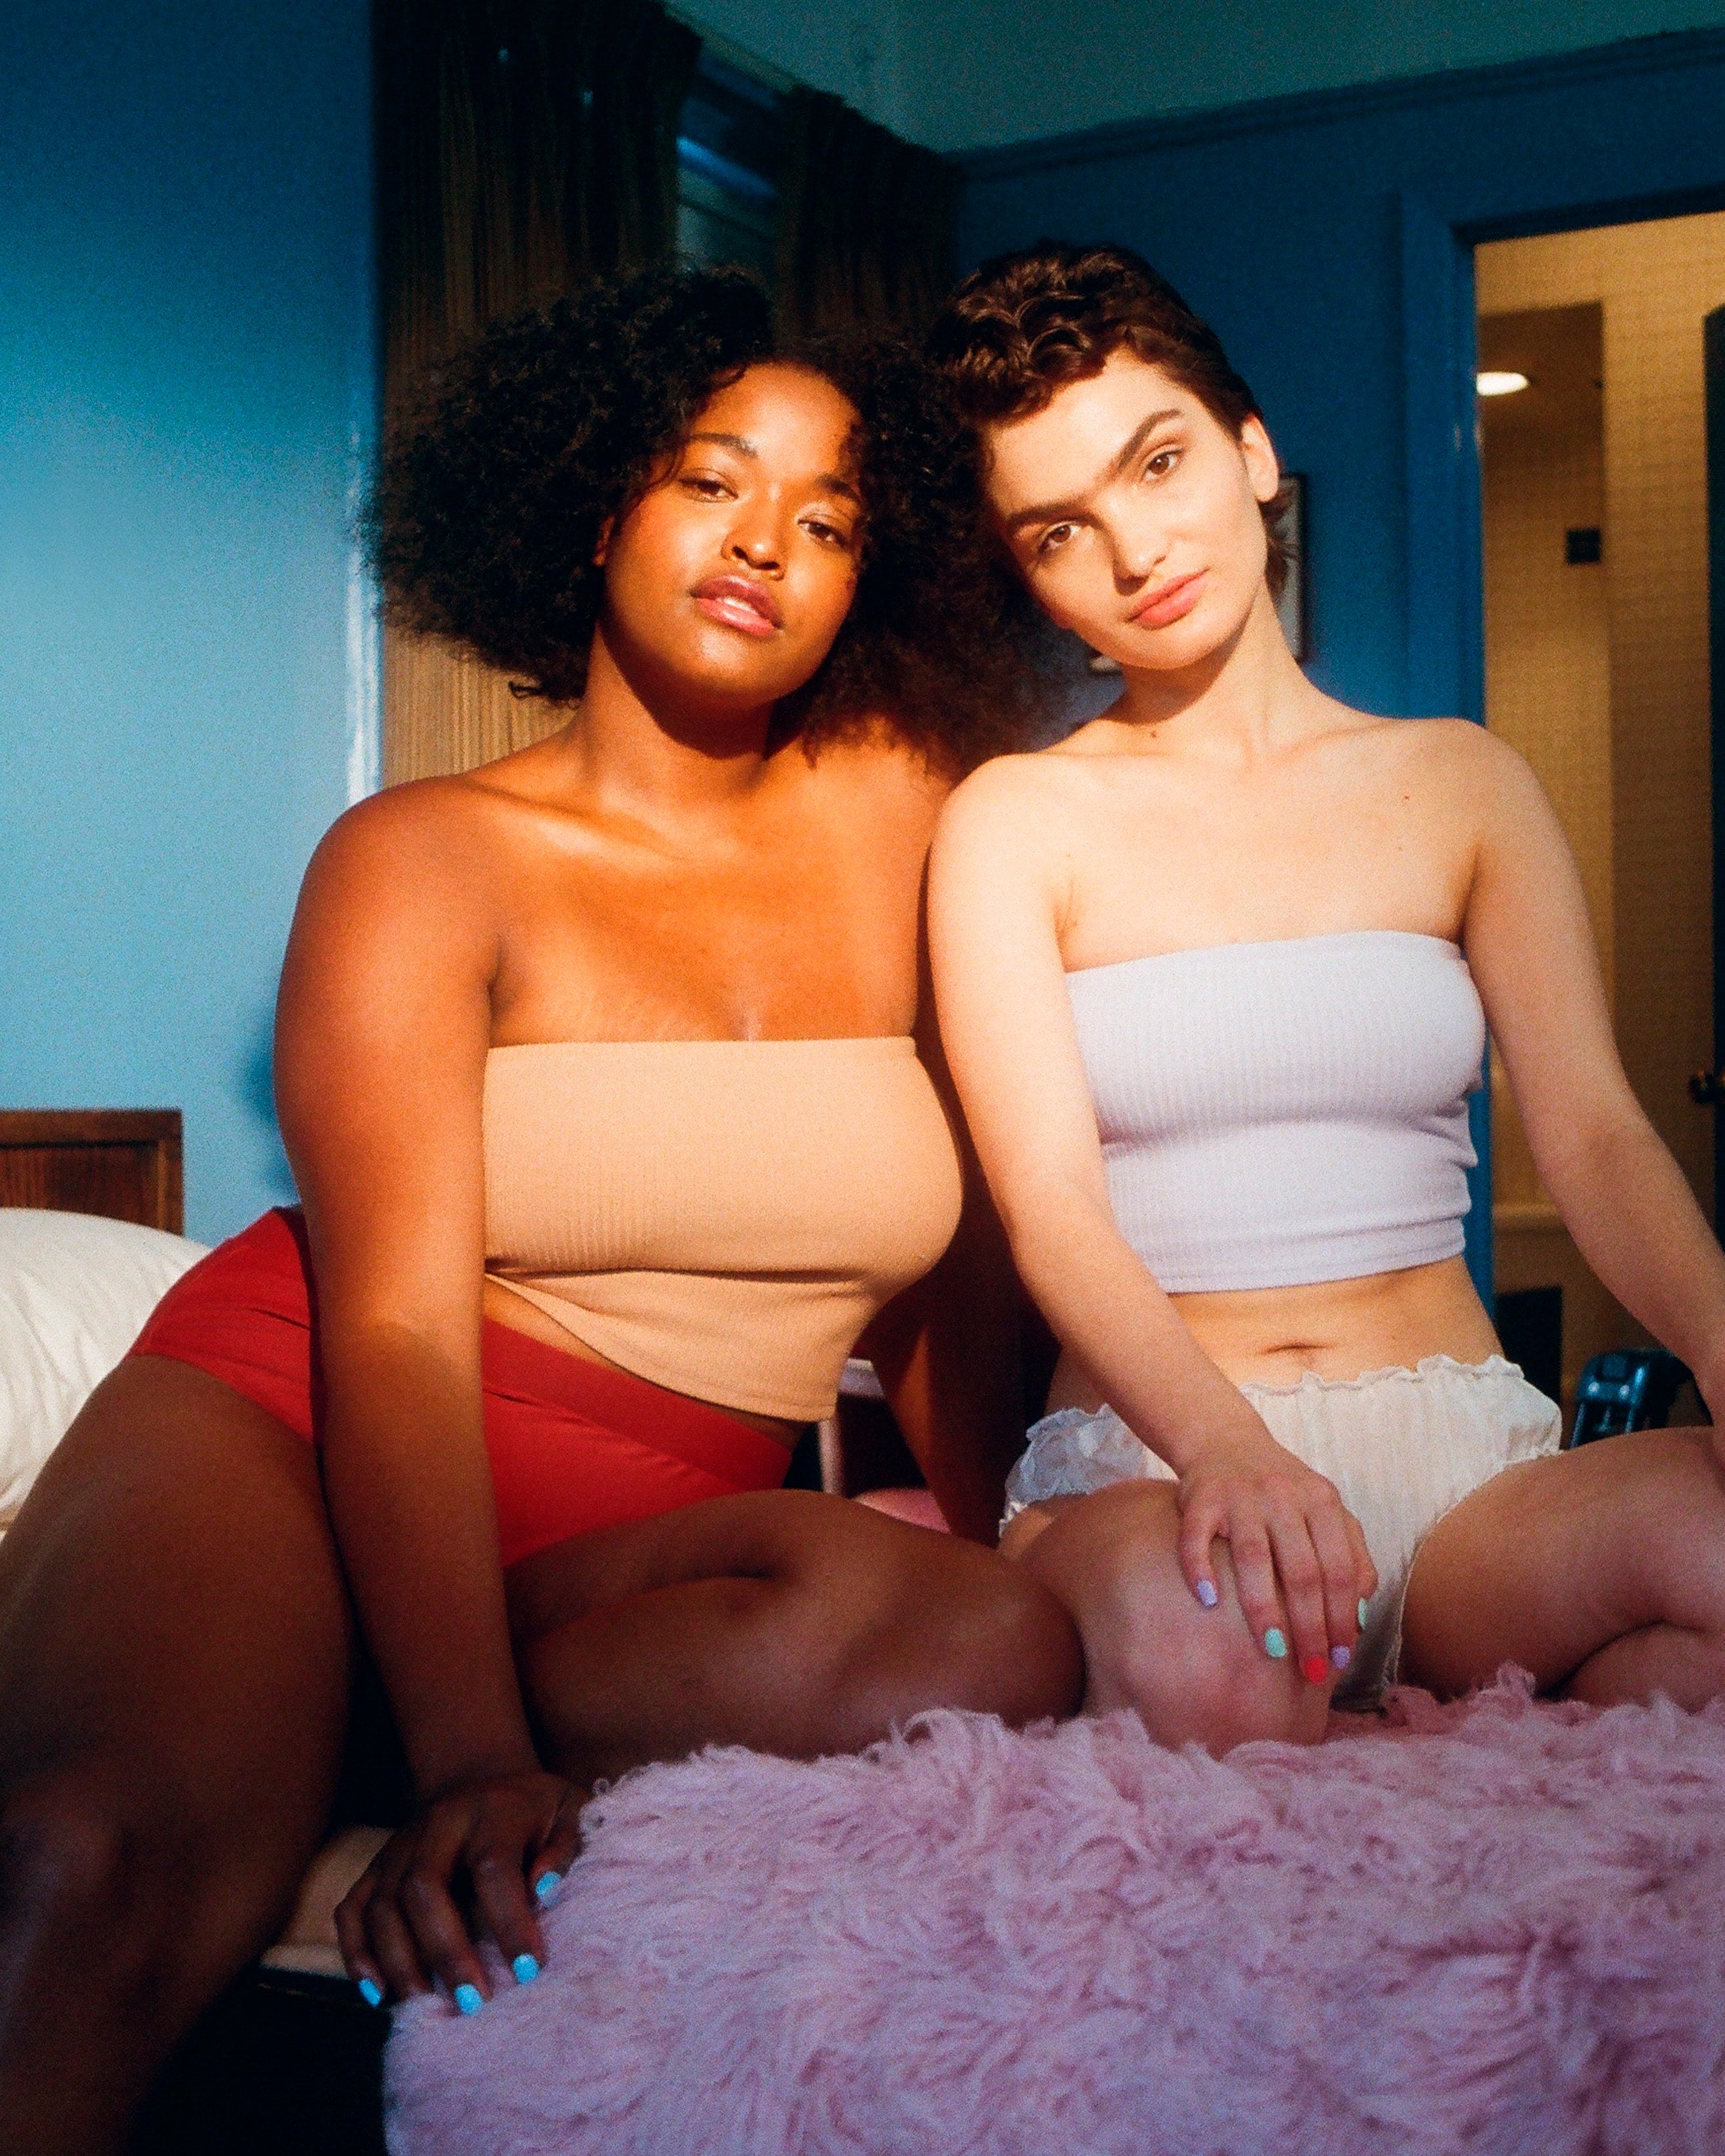 Two women sit on bed inside room